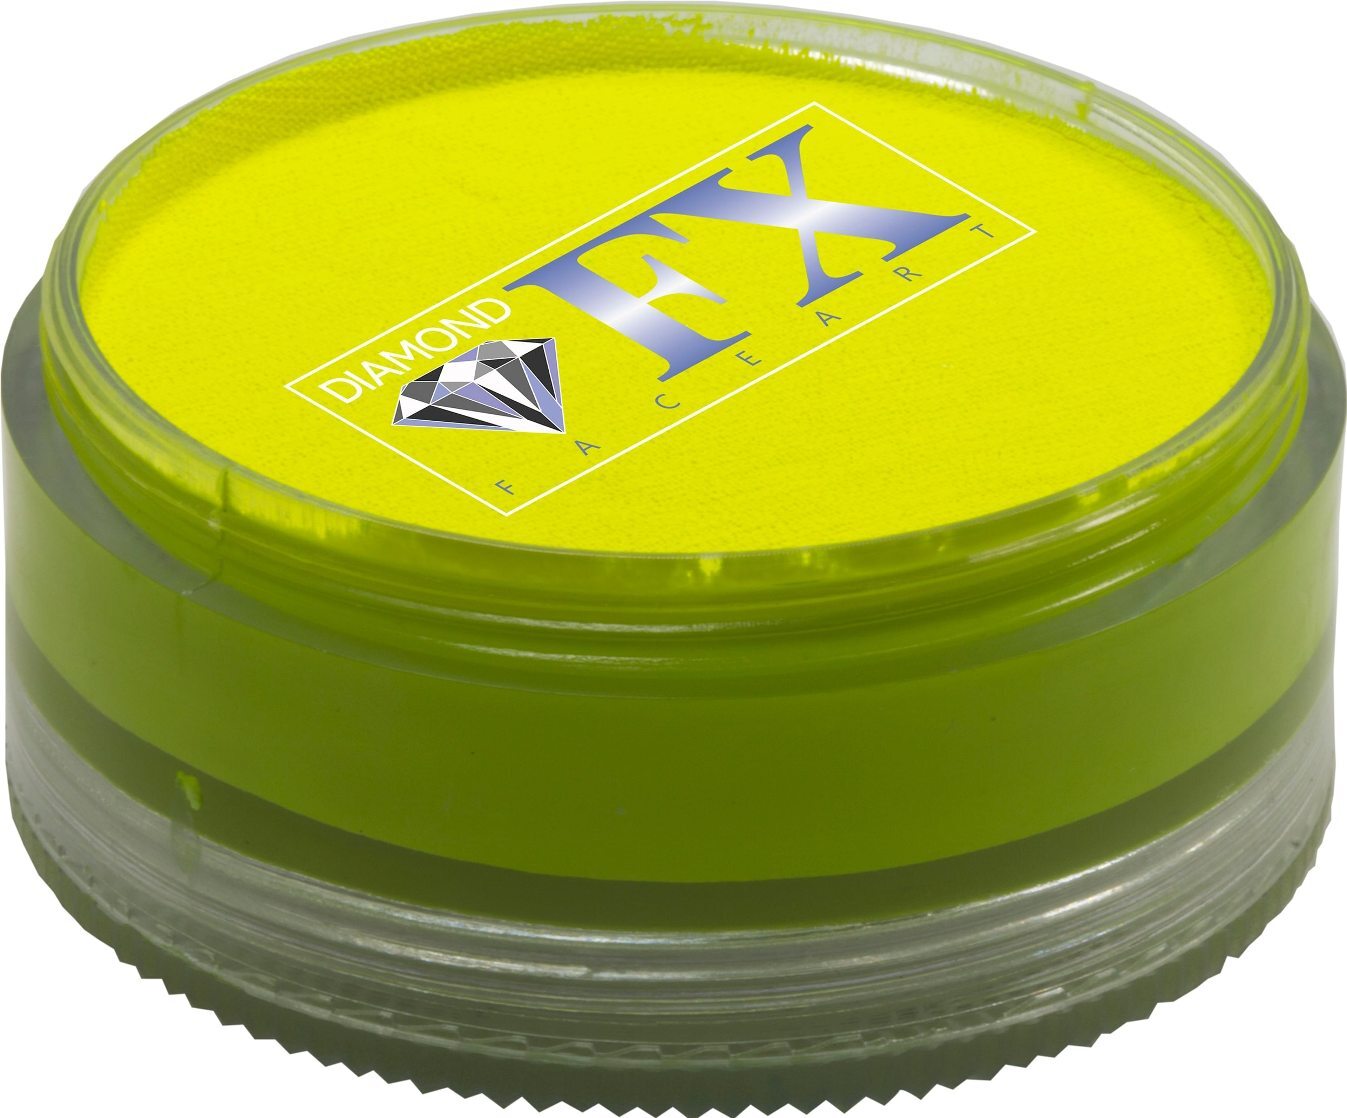 Diamond FX Yellow Neon 90g - Small Image